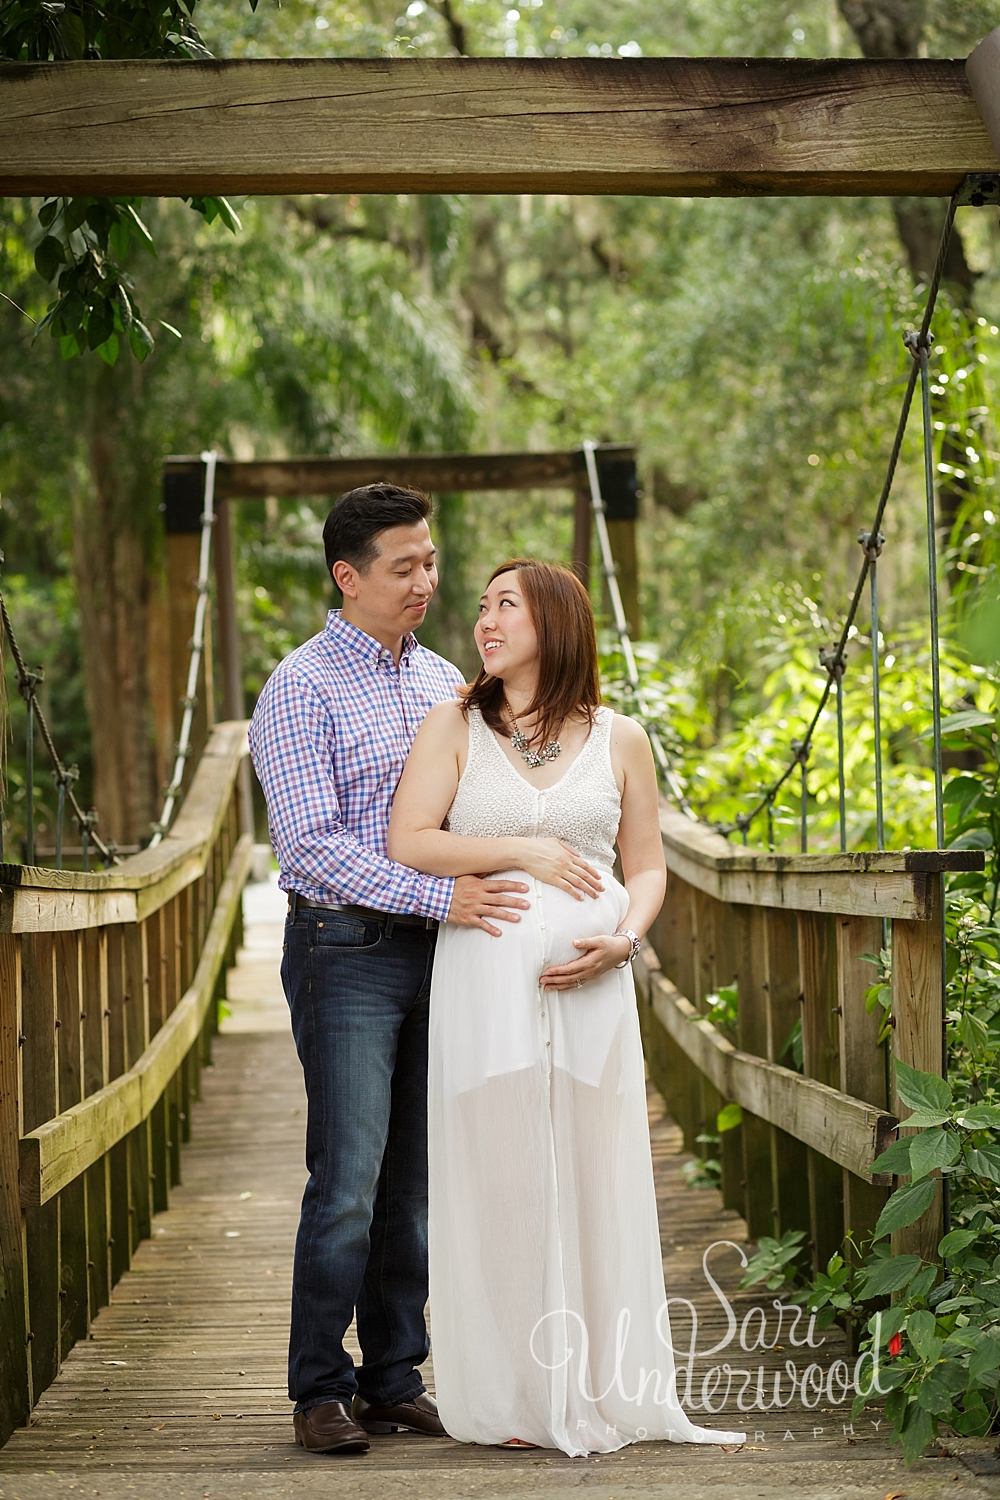 Central Florida maternity photography | Awaiting baby girl